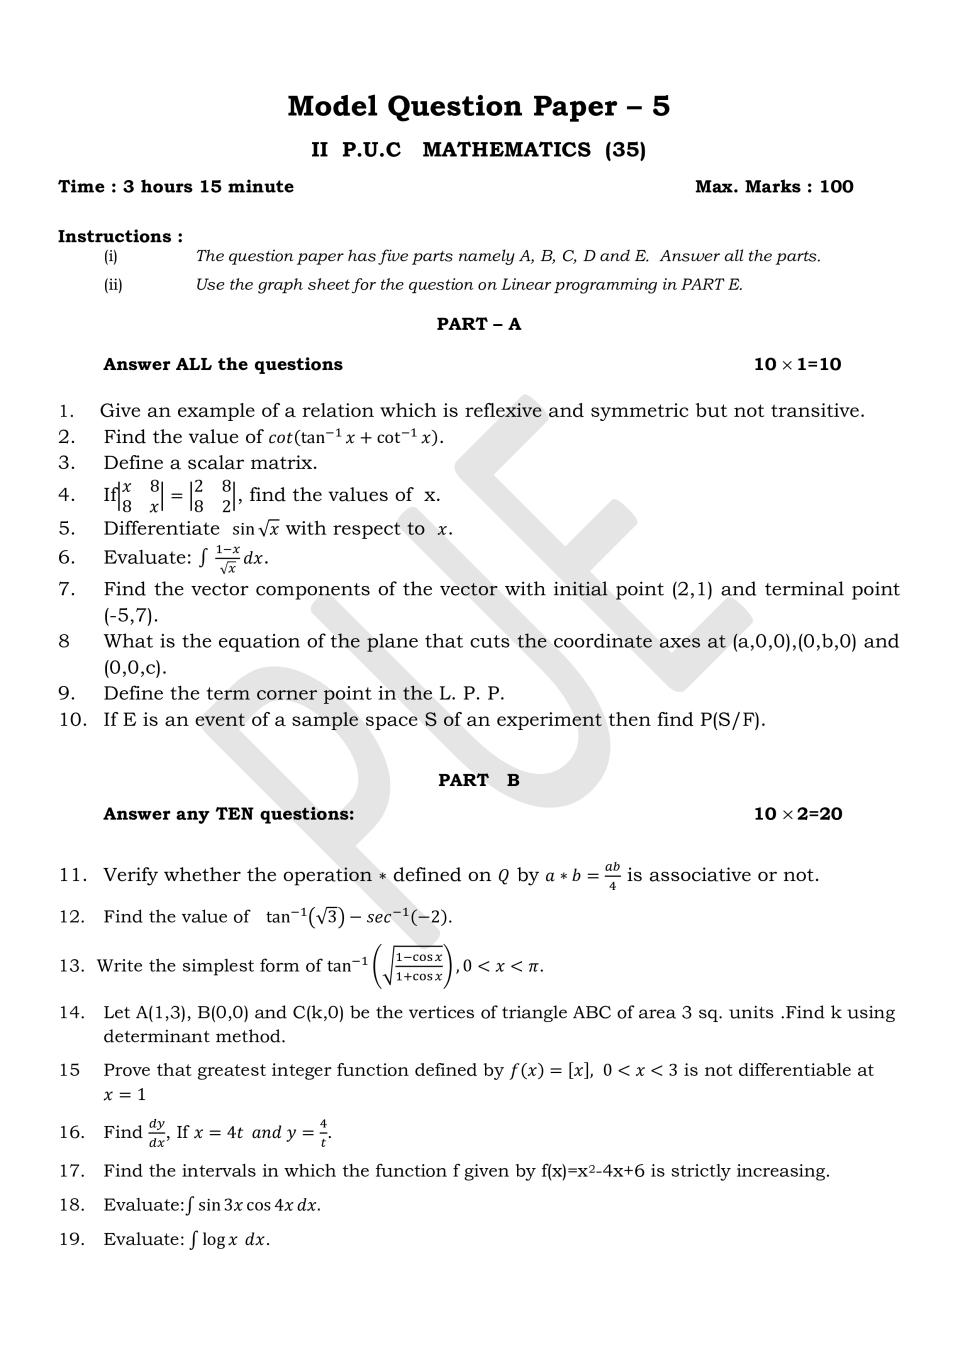 Karnataka 2nd PUC Model Question Paper for Maths Set 5 - Page 1